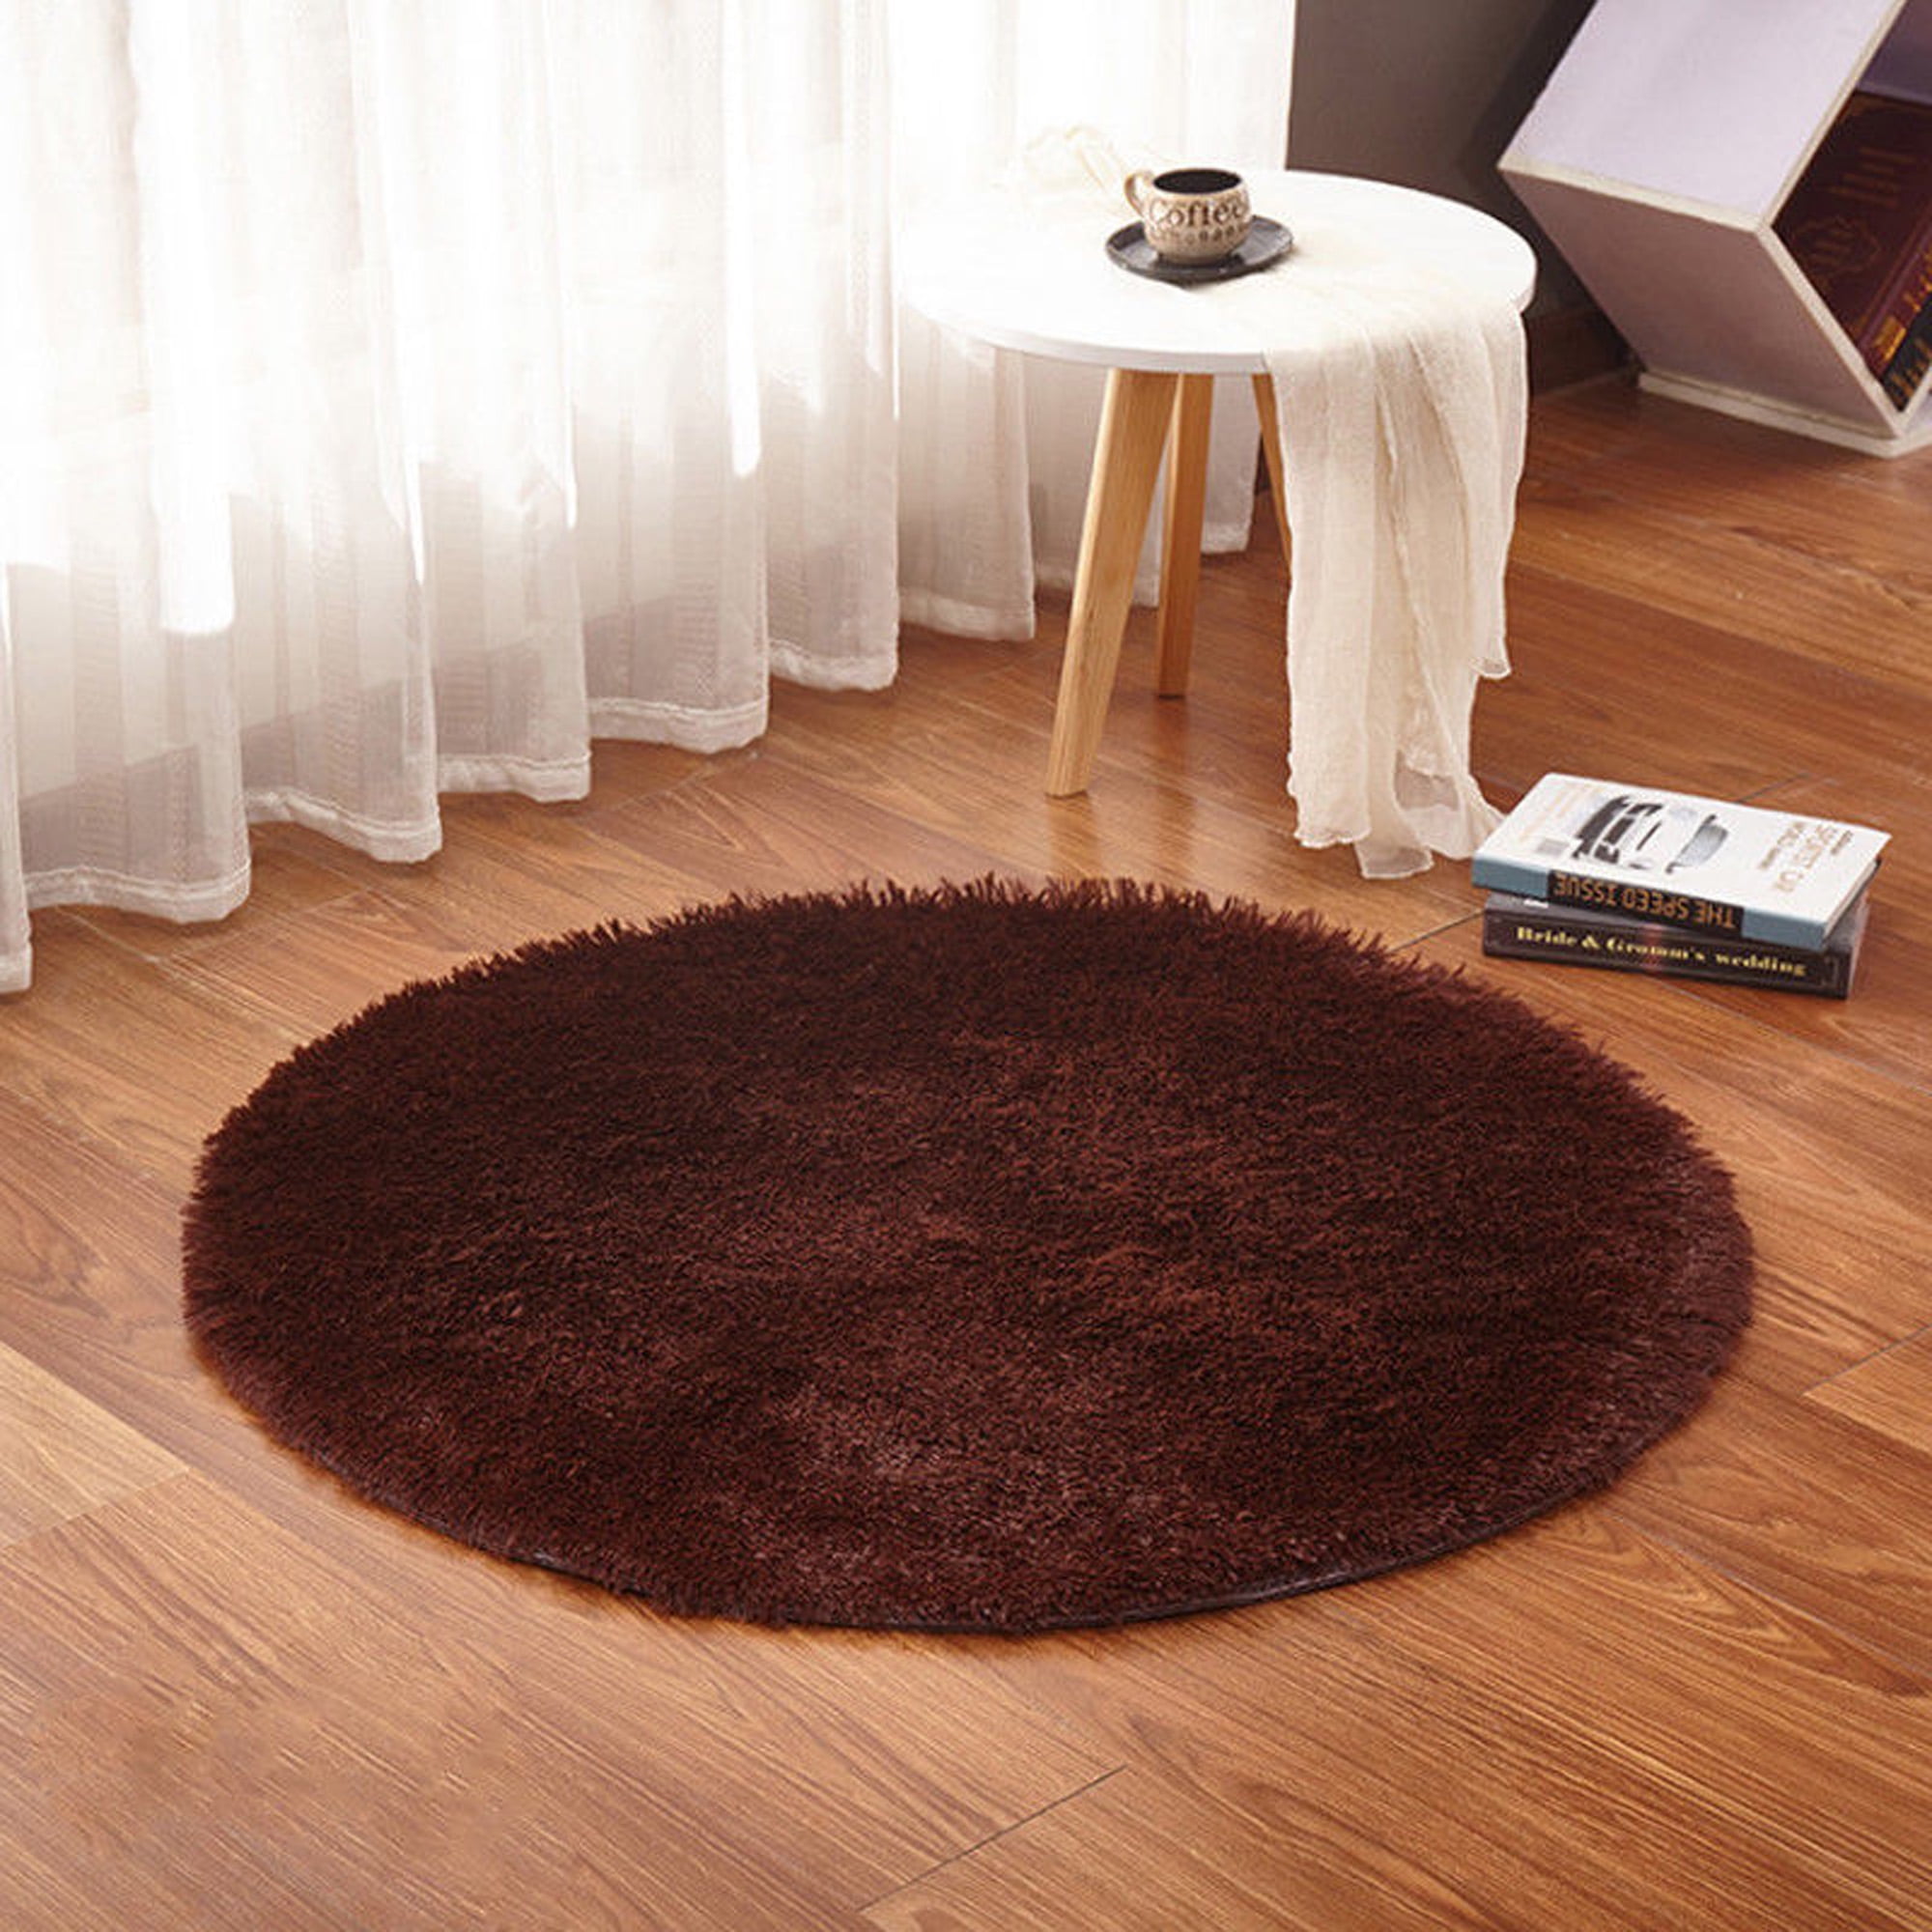 Details about   80CM Round Faux Plush Floor Rug Soft Shaggy Carpet Home Living Room Area Mat